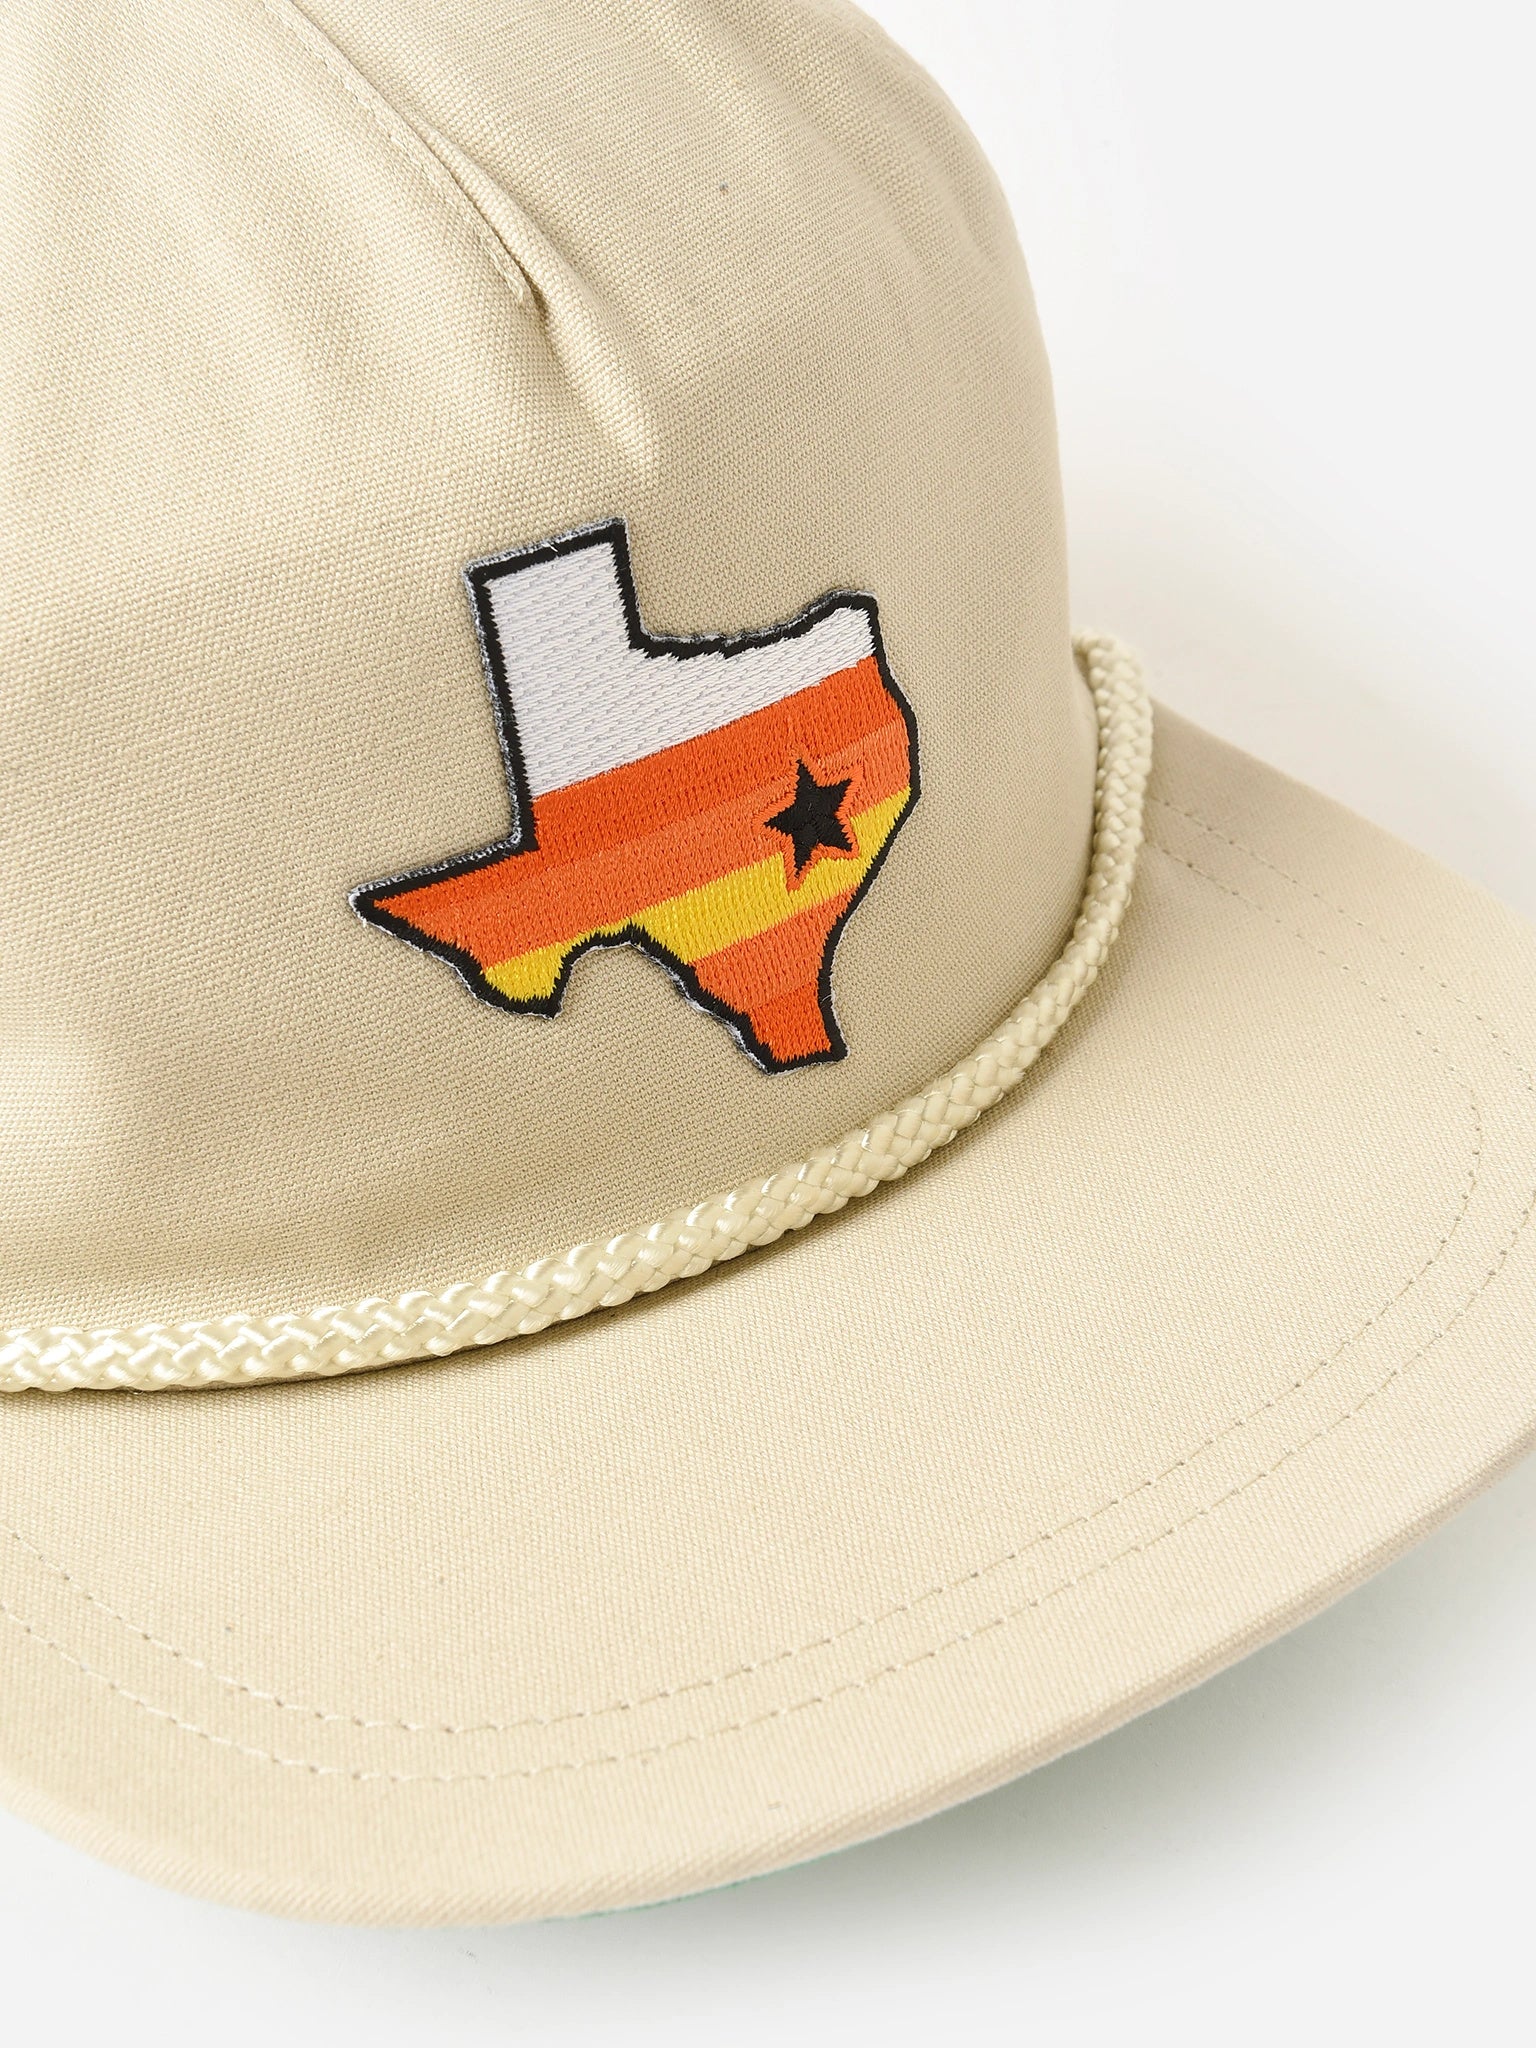 Saint Bernard Houston Astros Rope Hat –